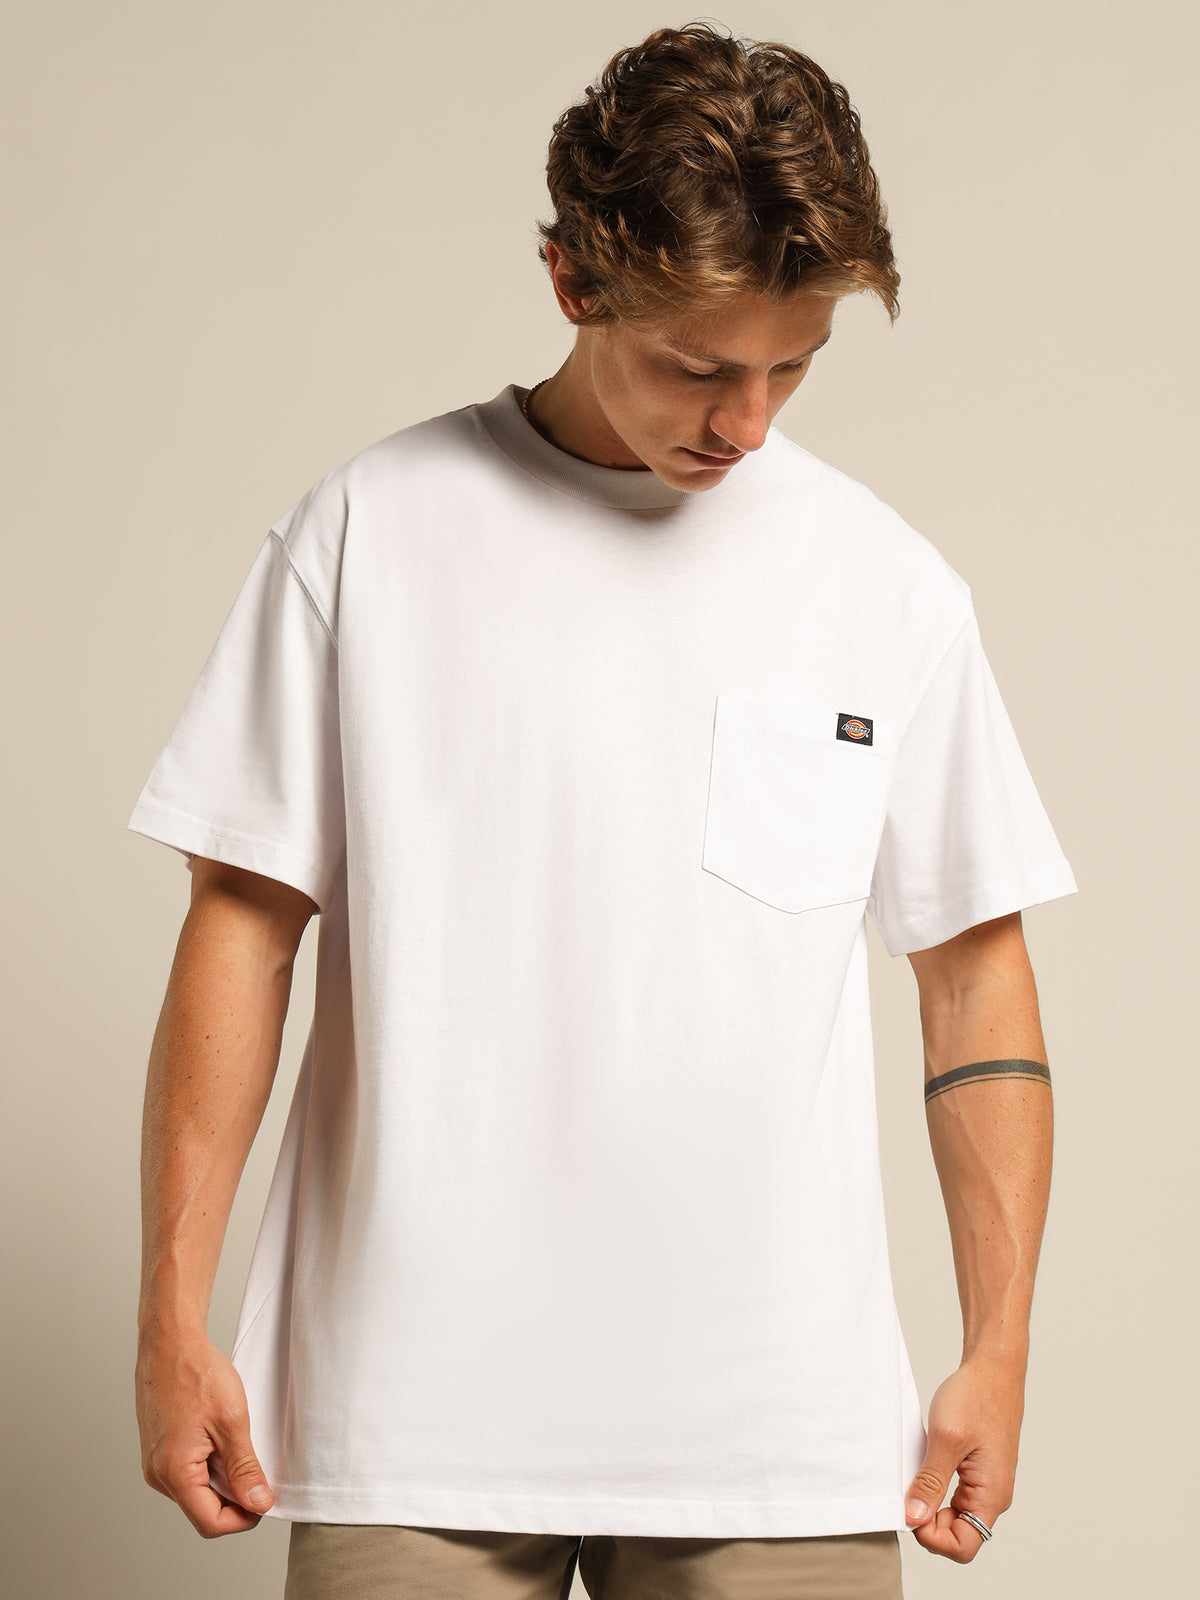 WS450 Heavyweight T-Shirt in White